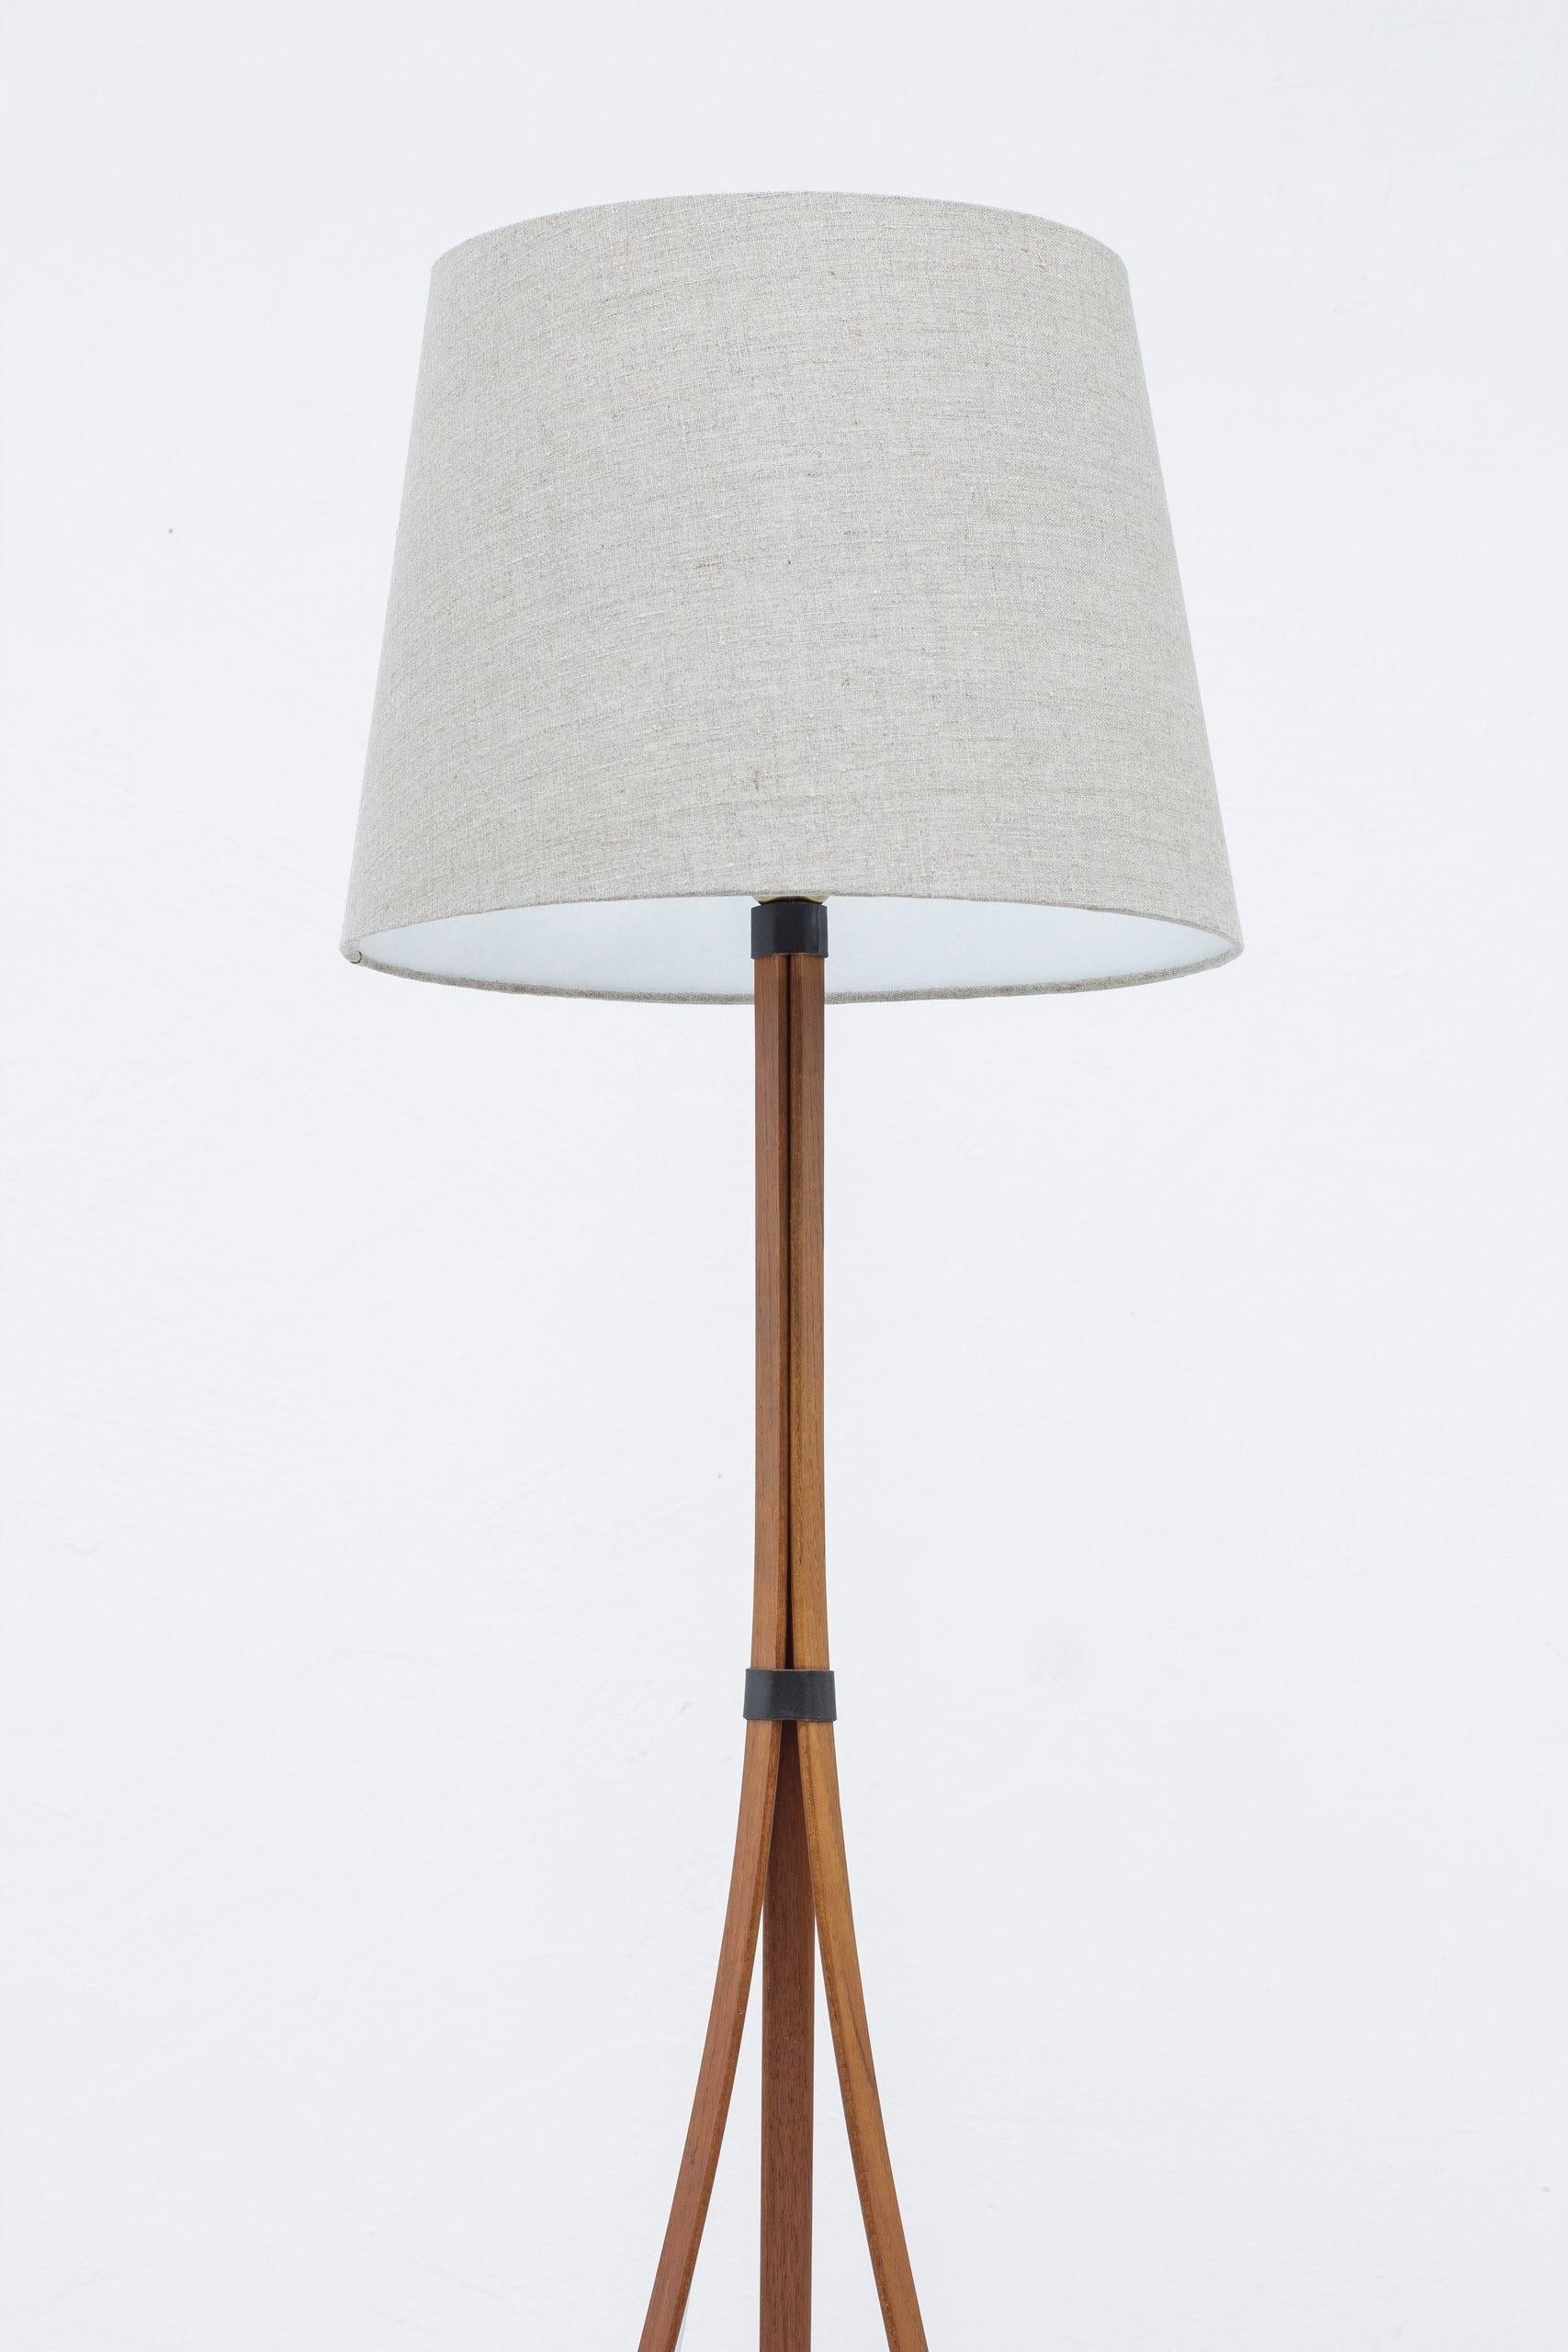 G-35 Teak Floor Lamp by Alf Svensson for Bergboms, Sweden, 1950s In Good Condition For Sale In Hägersten, SE